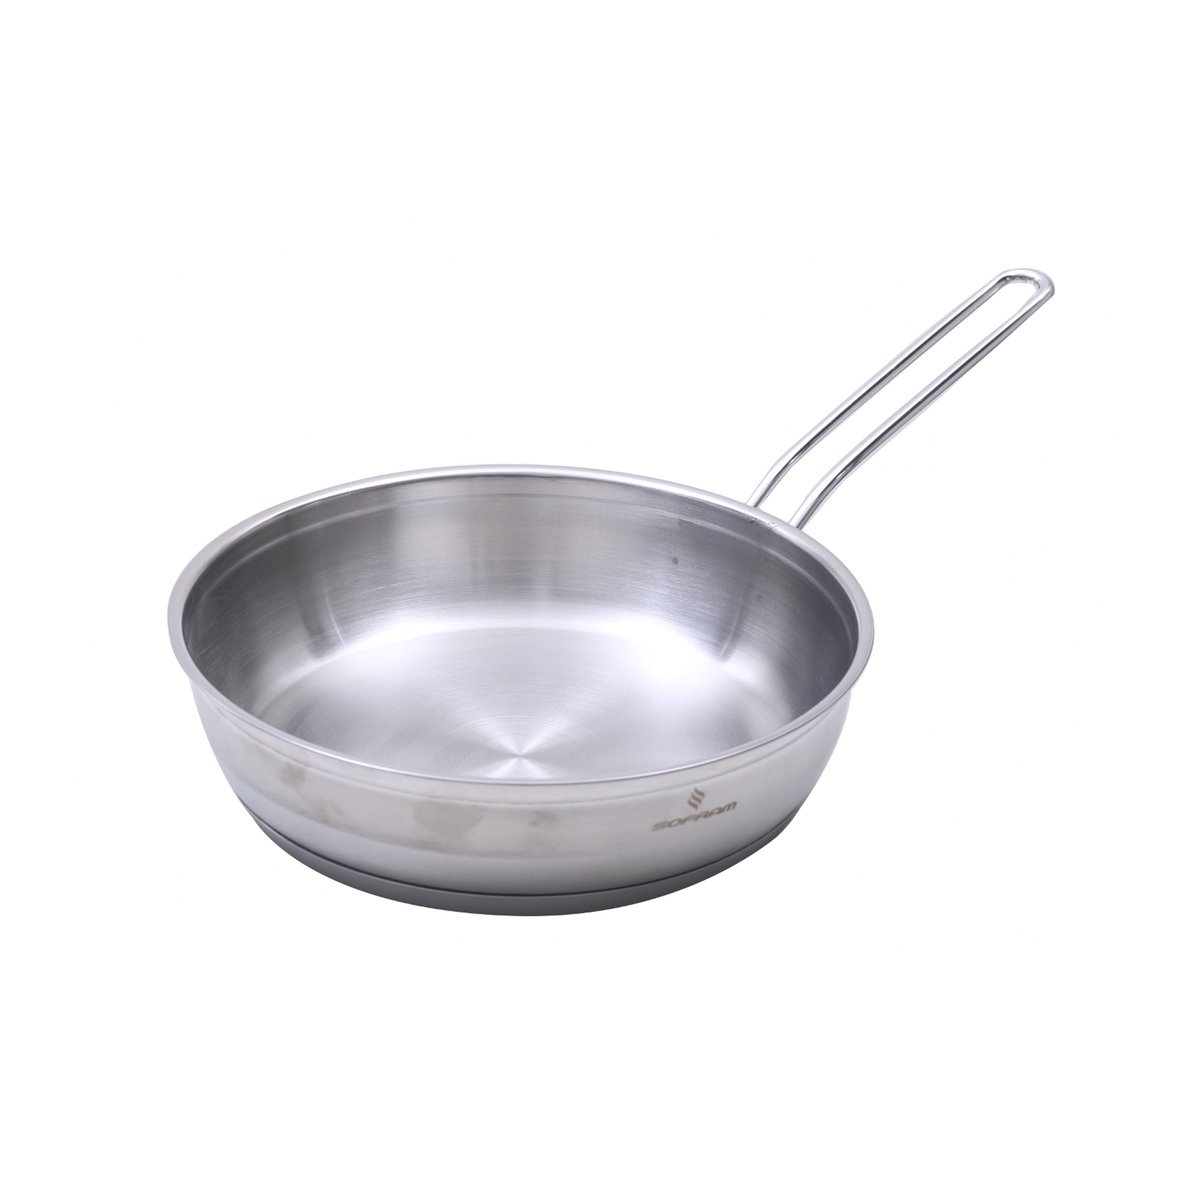 Sofram Stainless Steel Fry Pan, 22 cm, 2799